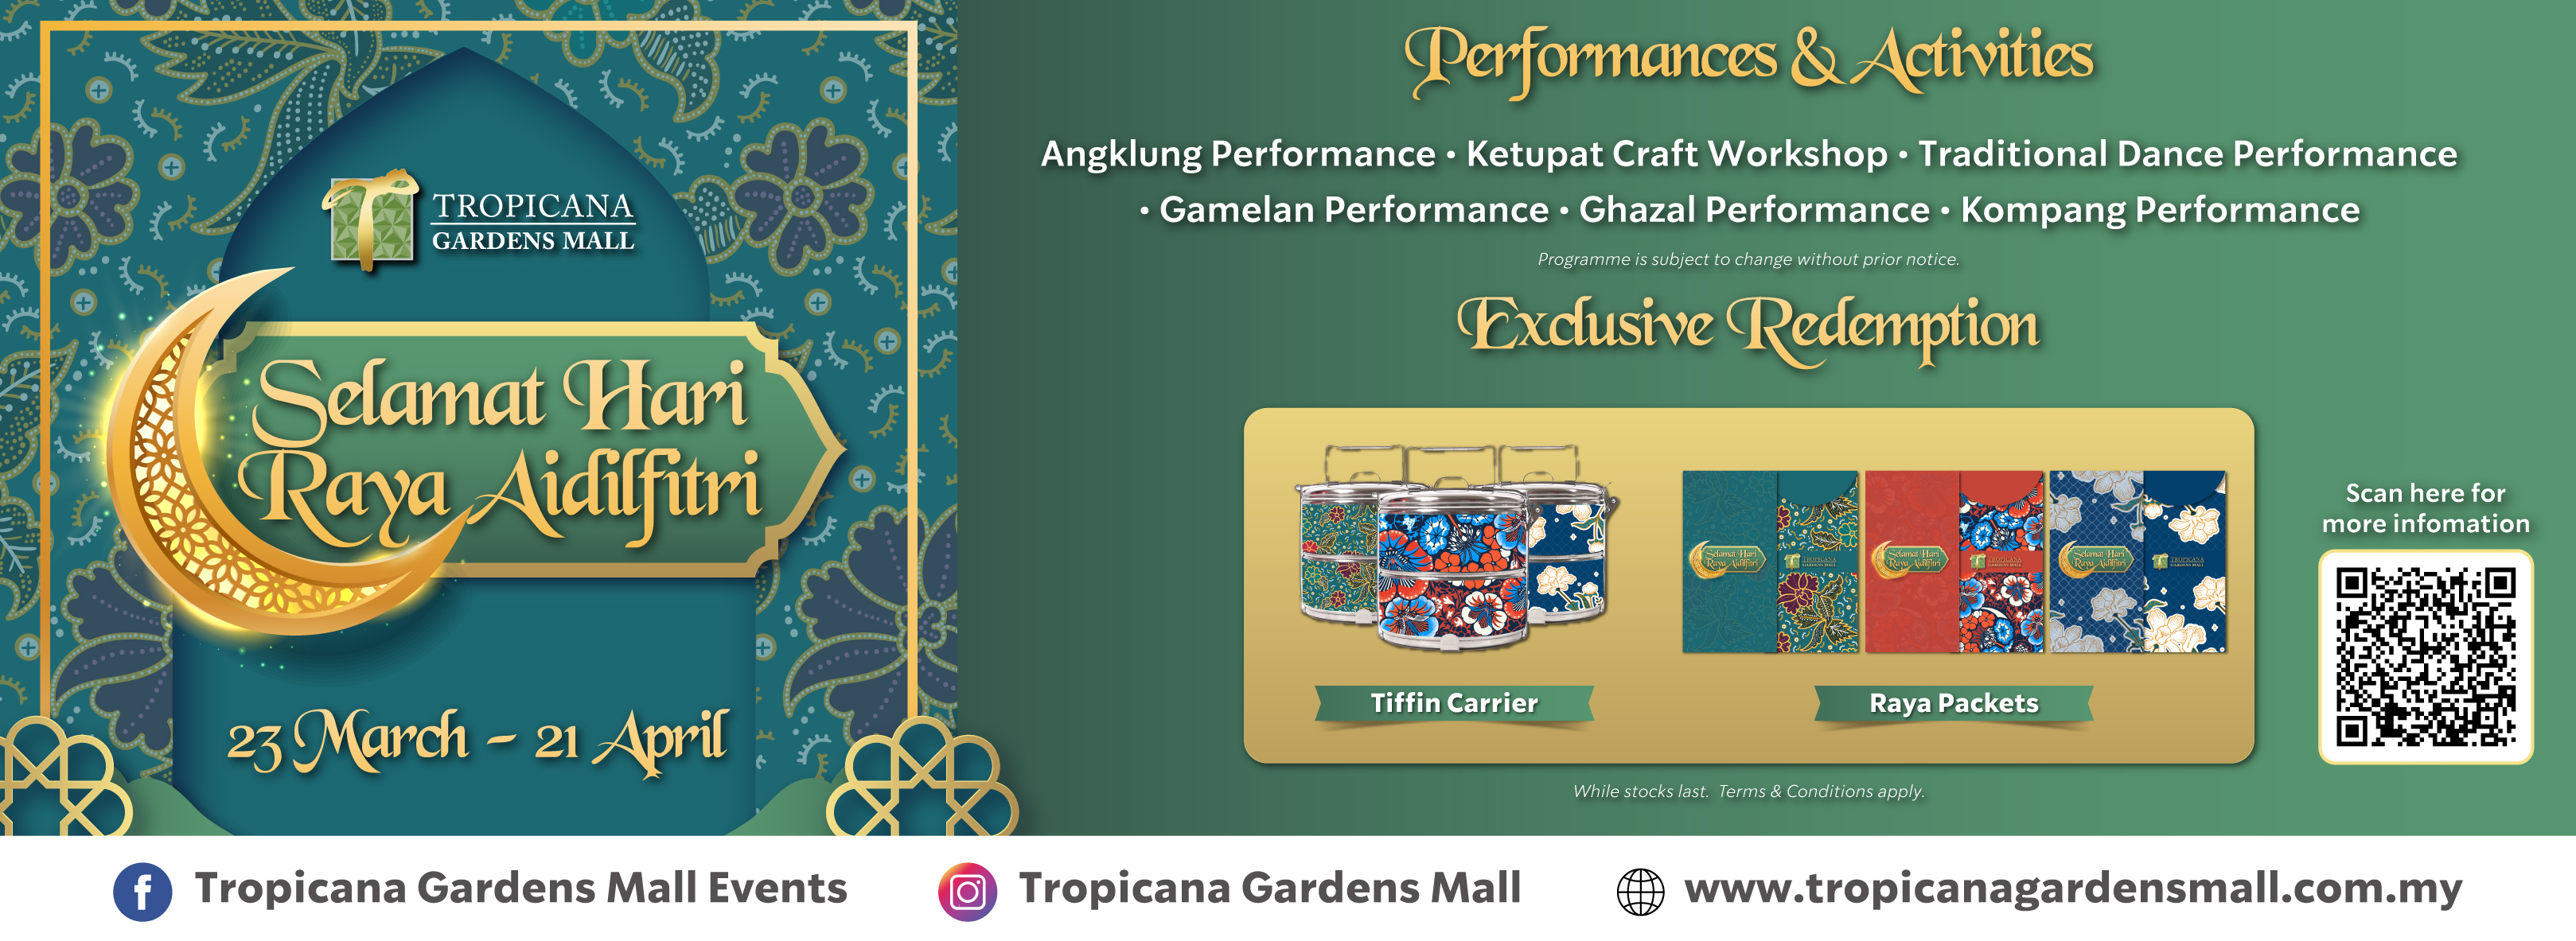 Tropicana Gardens Mall Hari Raya Gift Redemptions, Performances & Activities